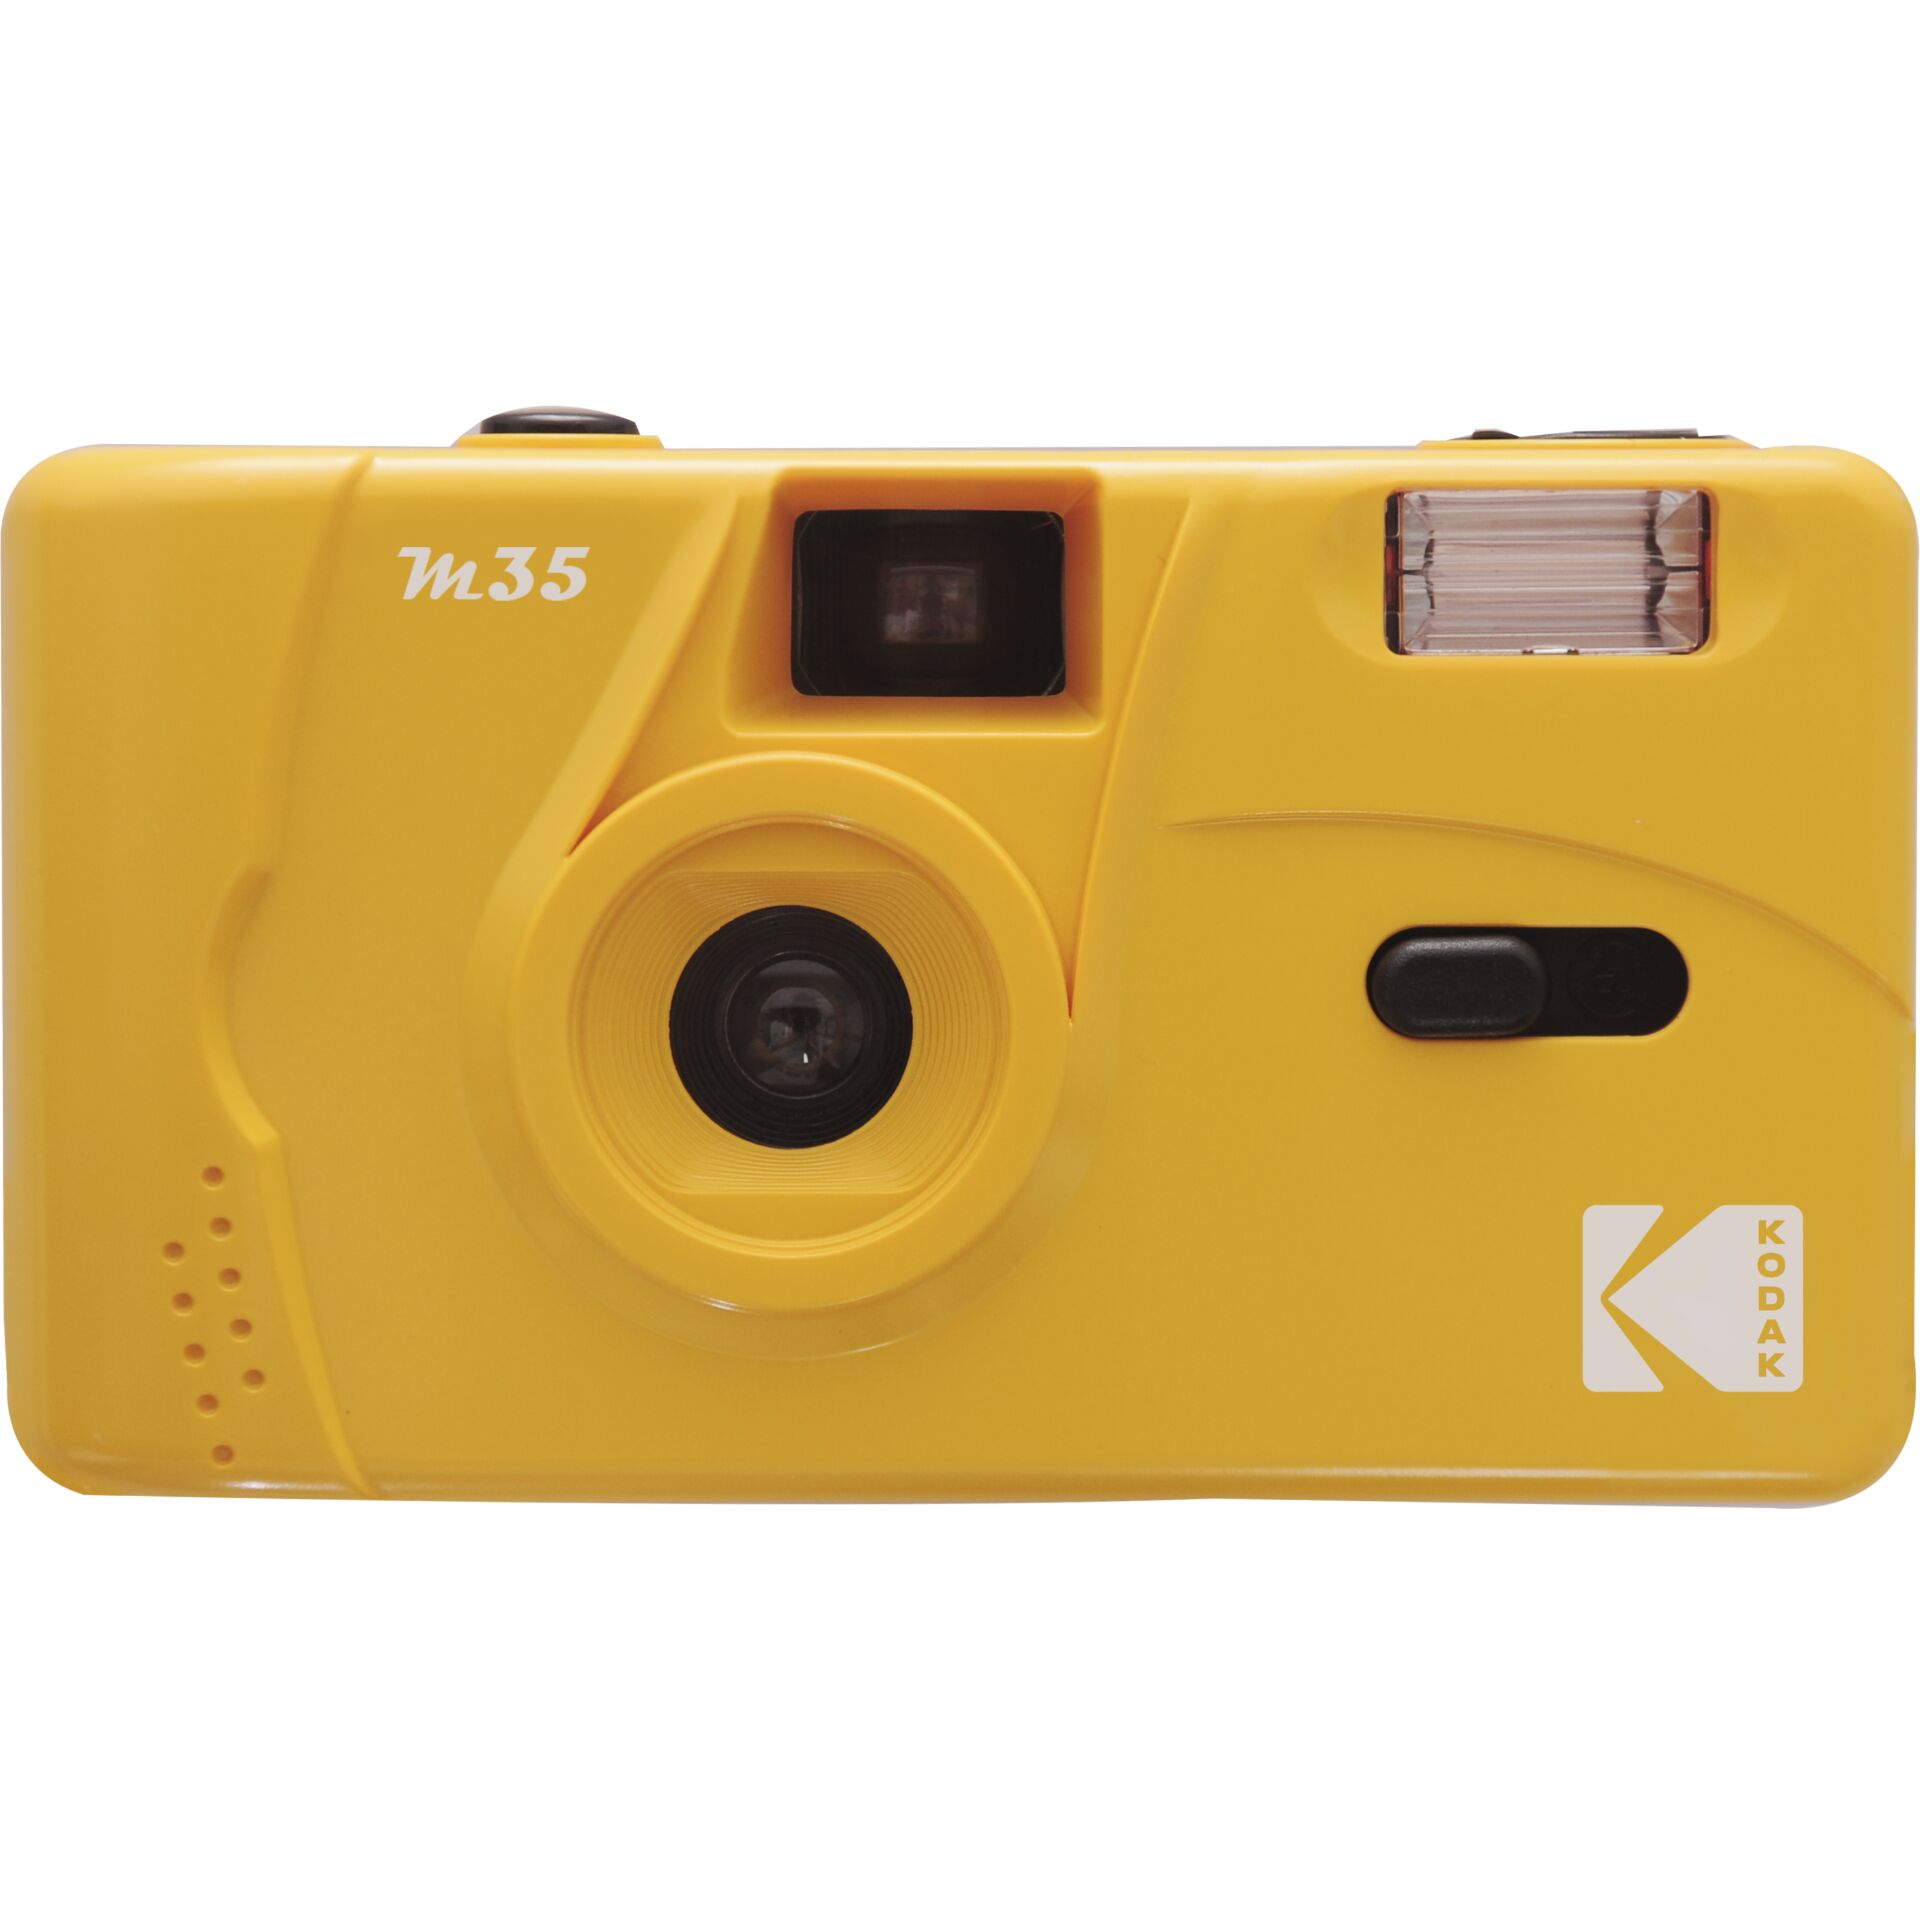 Kodak Film Camera m35 with Flash yellow